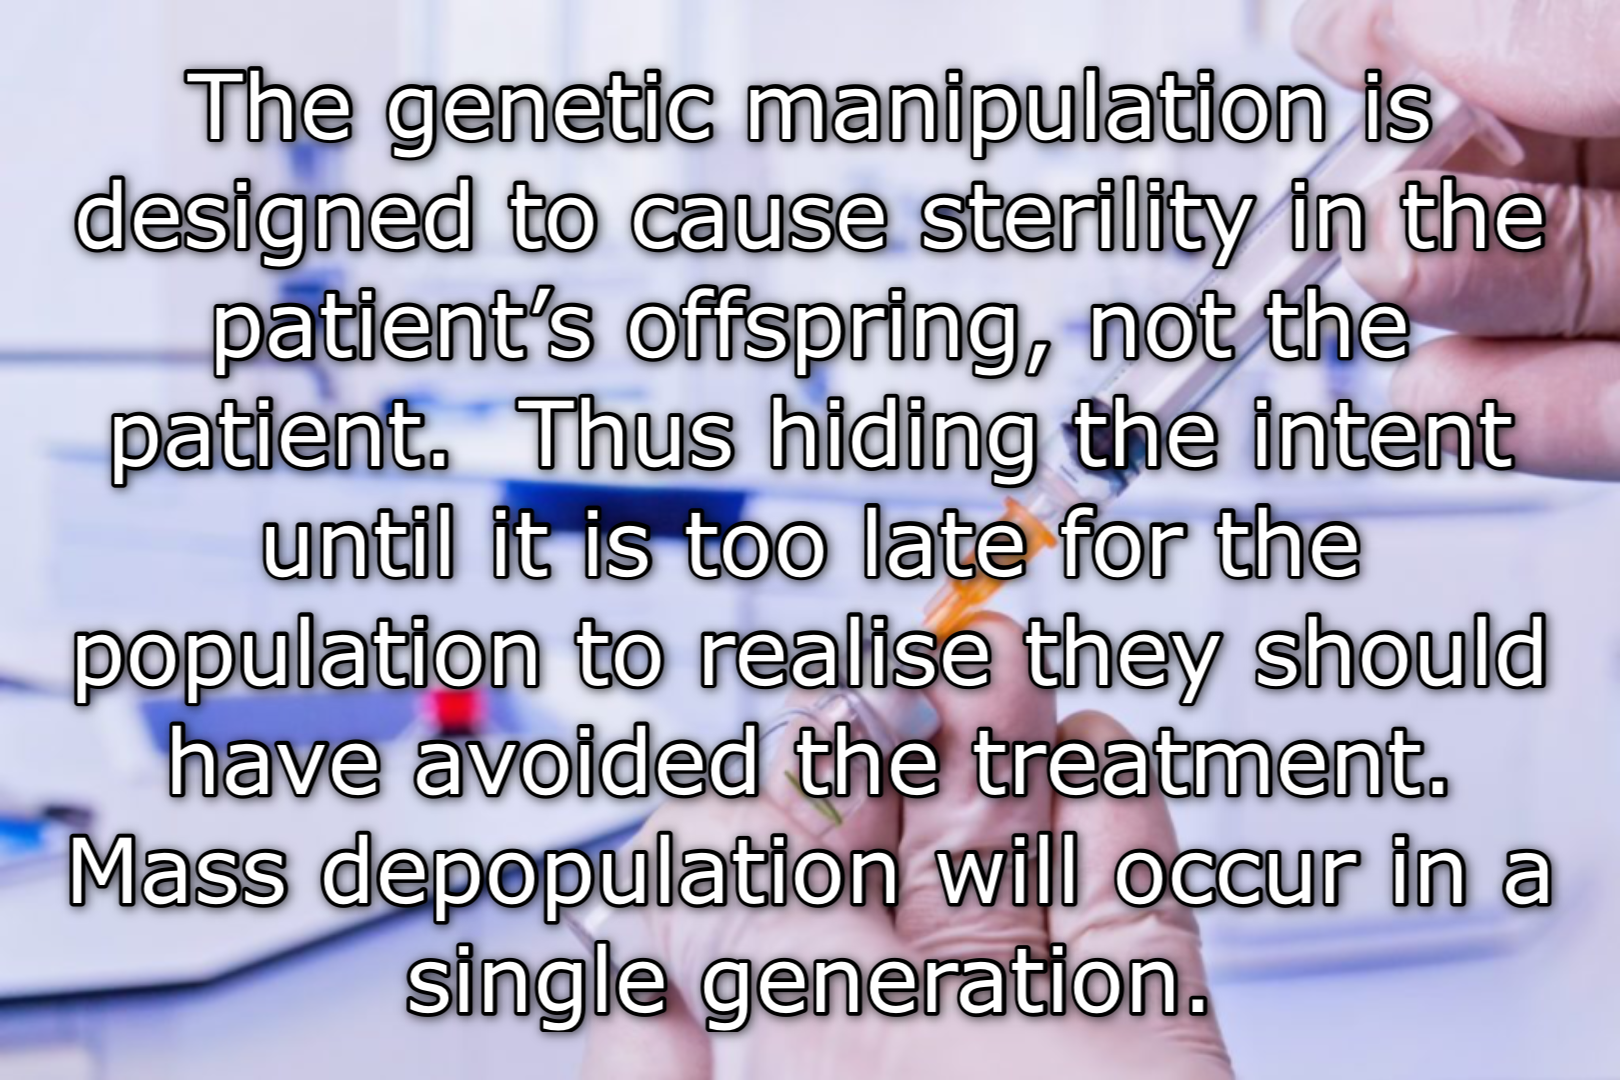 Depopulation through sterilisation